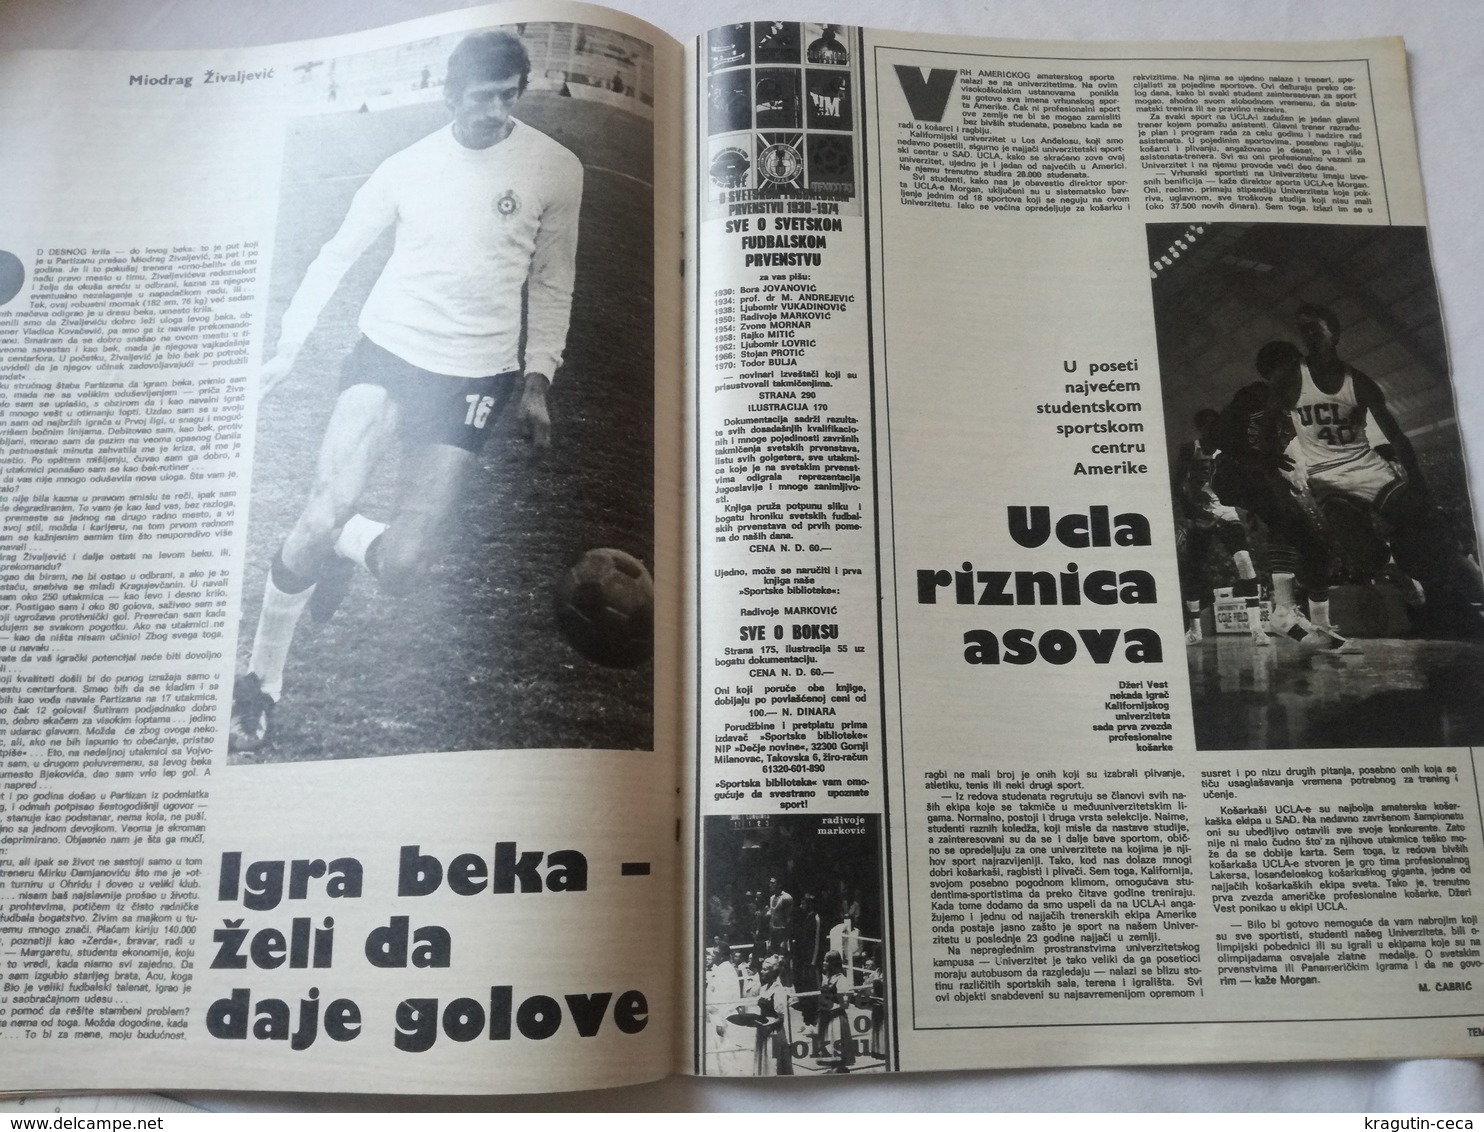 1974 TEMPO YUGOSLAVIA SERBIA SPORT FOOTBALL MAGAZINE NEWSPAPERS WM74 CHAMPIONSHIPS WOMAN HANDBALL Anatoly Karpov CHESS